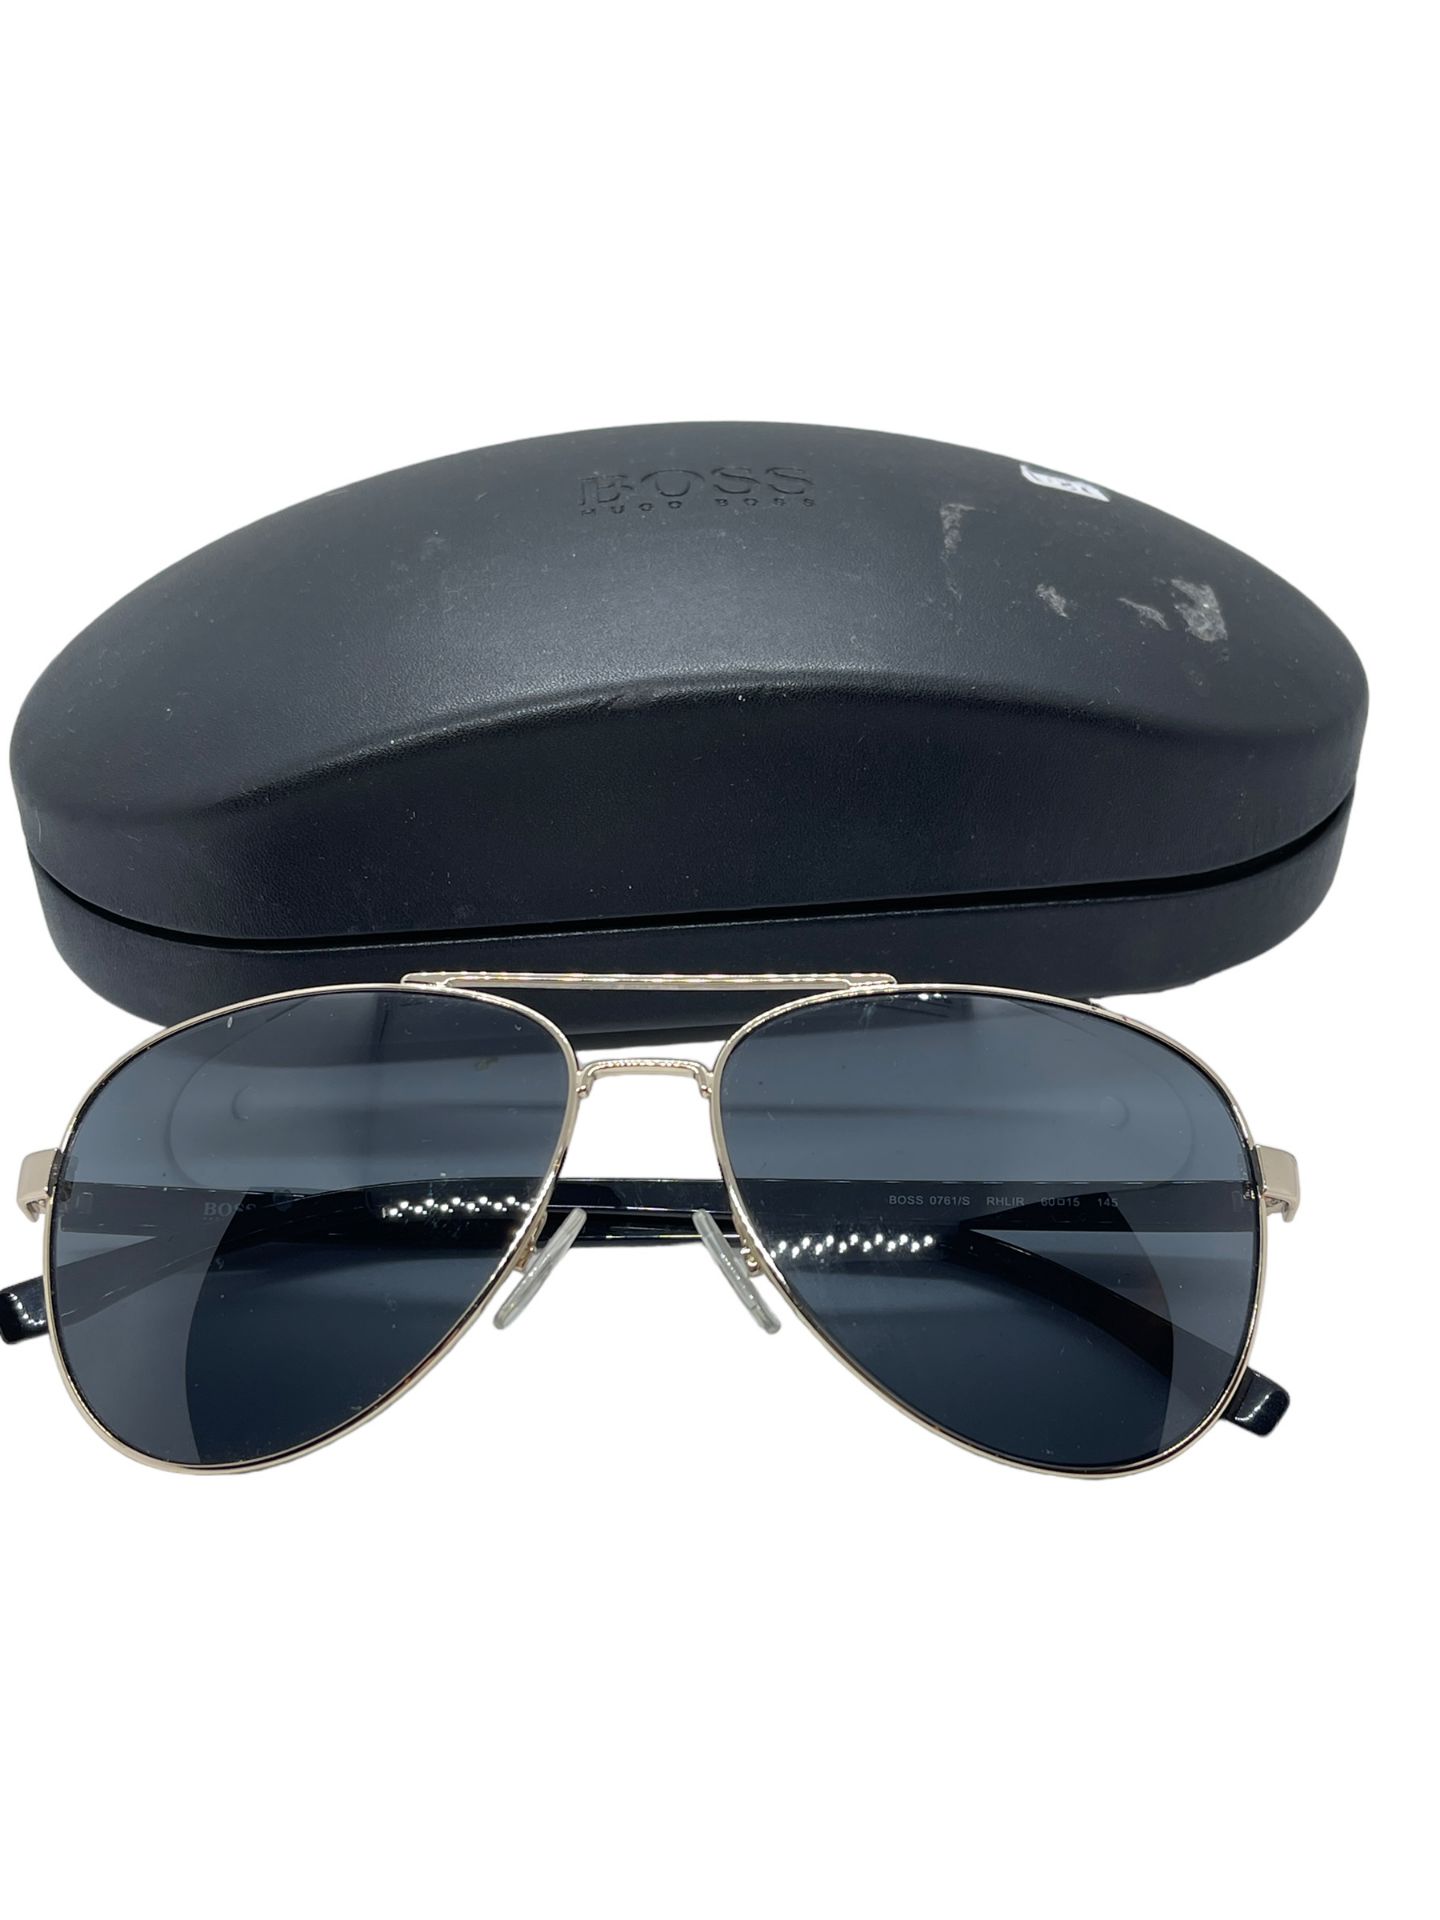 Hugo Boss Sunglasses gold plated aviators with case surplus stock xdemo - Bild 2 aus 6